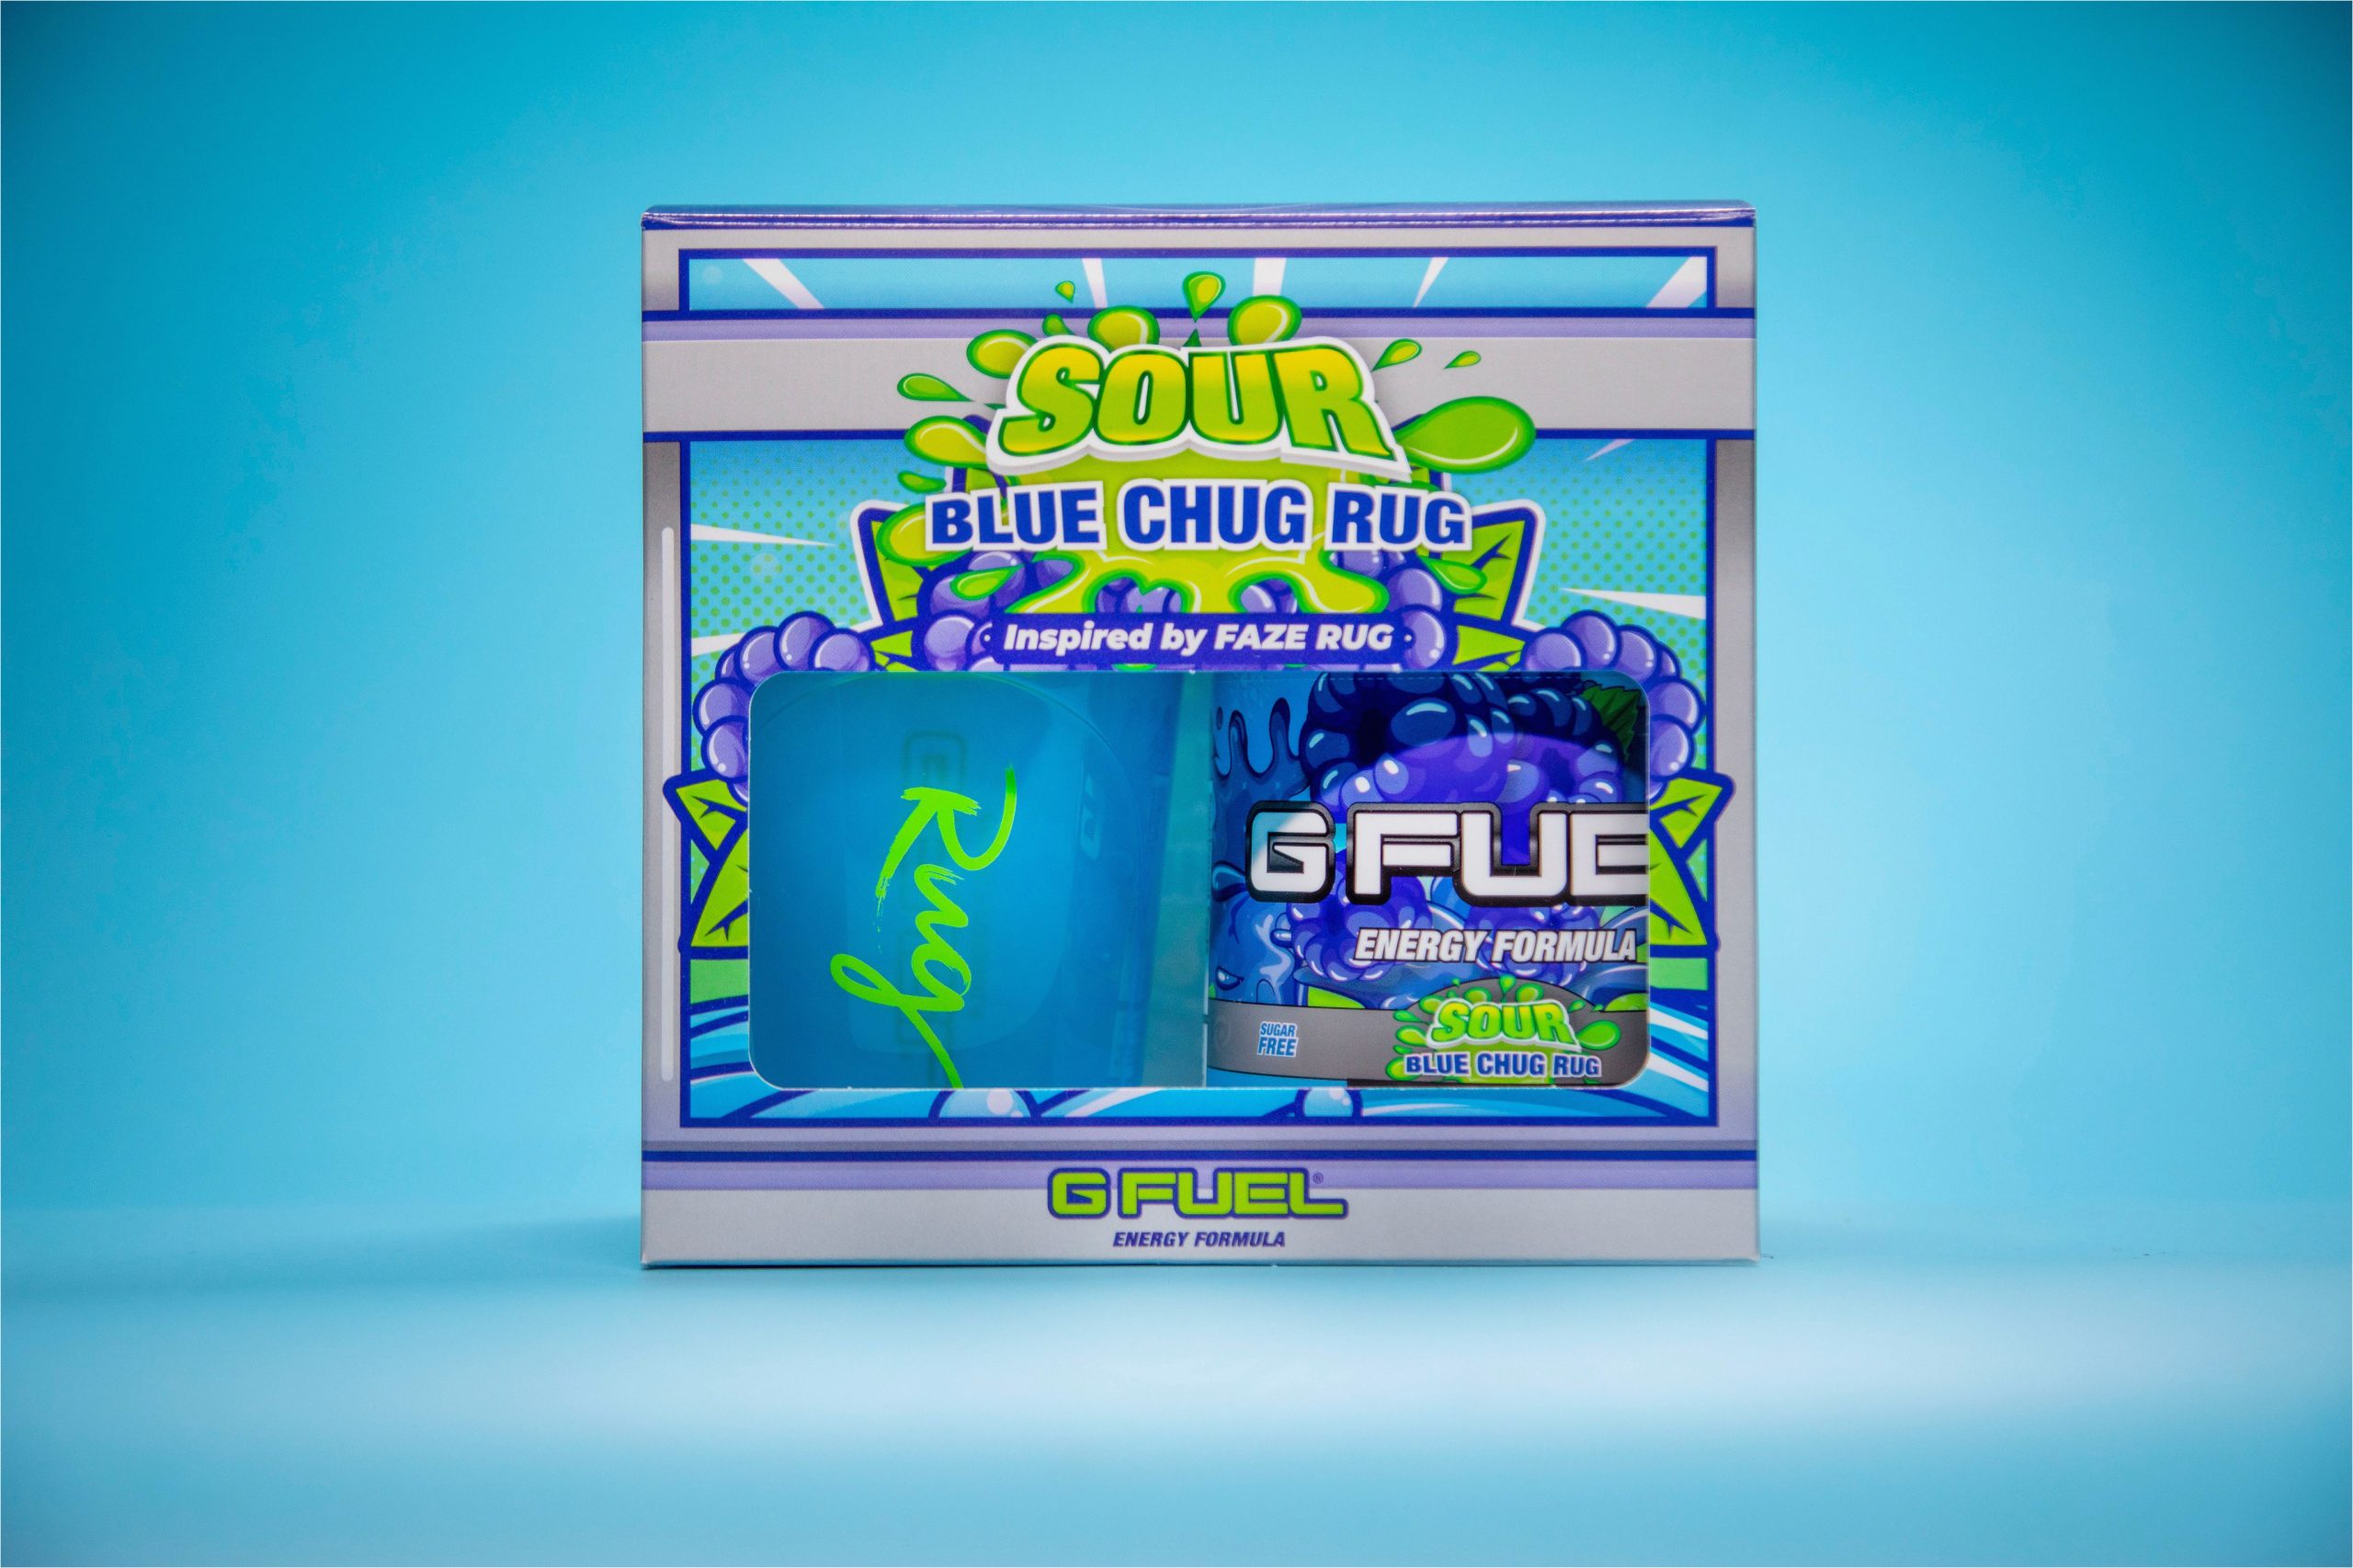 Sour Blue Chug Rug Collectors Box G FuelÂ® On Twitter: “ðð¦ Chug Rug Update ð¦ð Our @fazerug X …